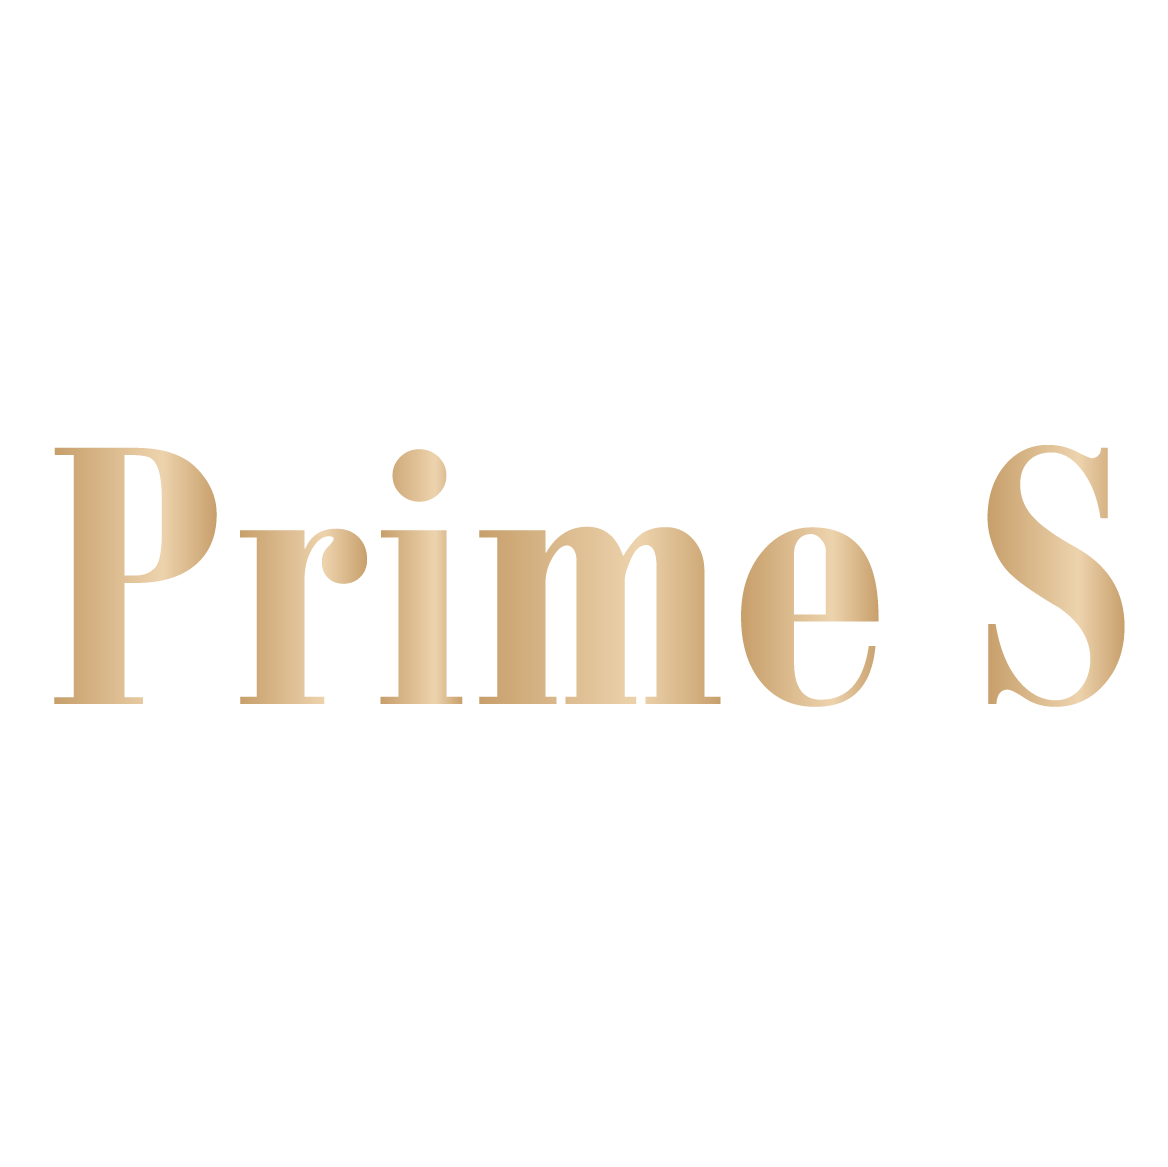 prime